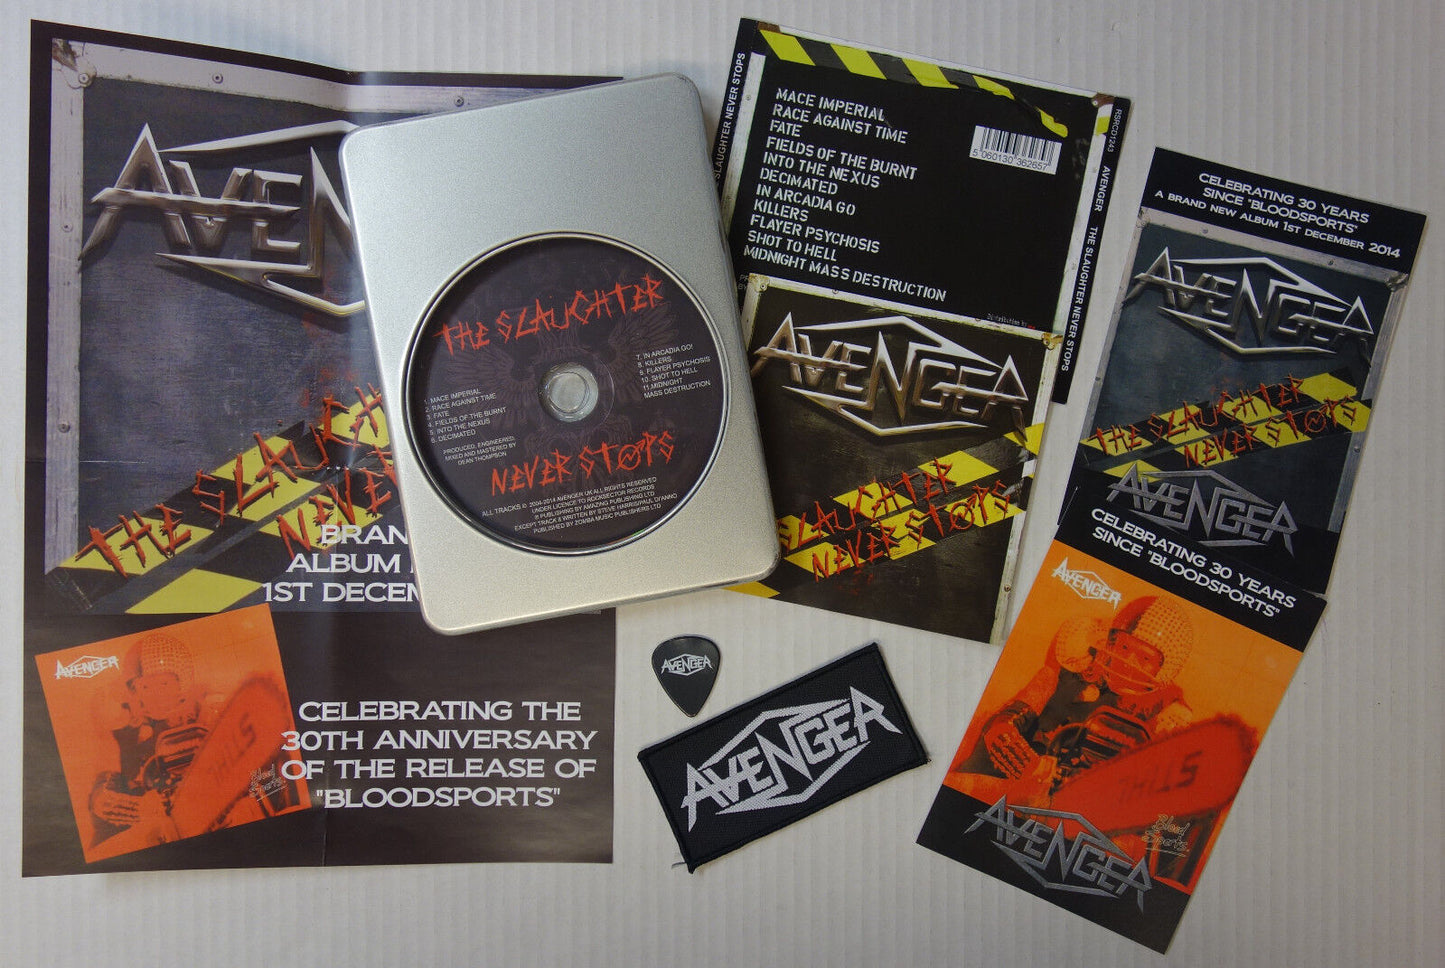 Avenger - The Slaughter Never Stops CD 2014  Fan Pack Metal Box + Plectrum+Patch